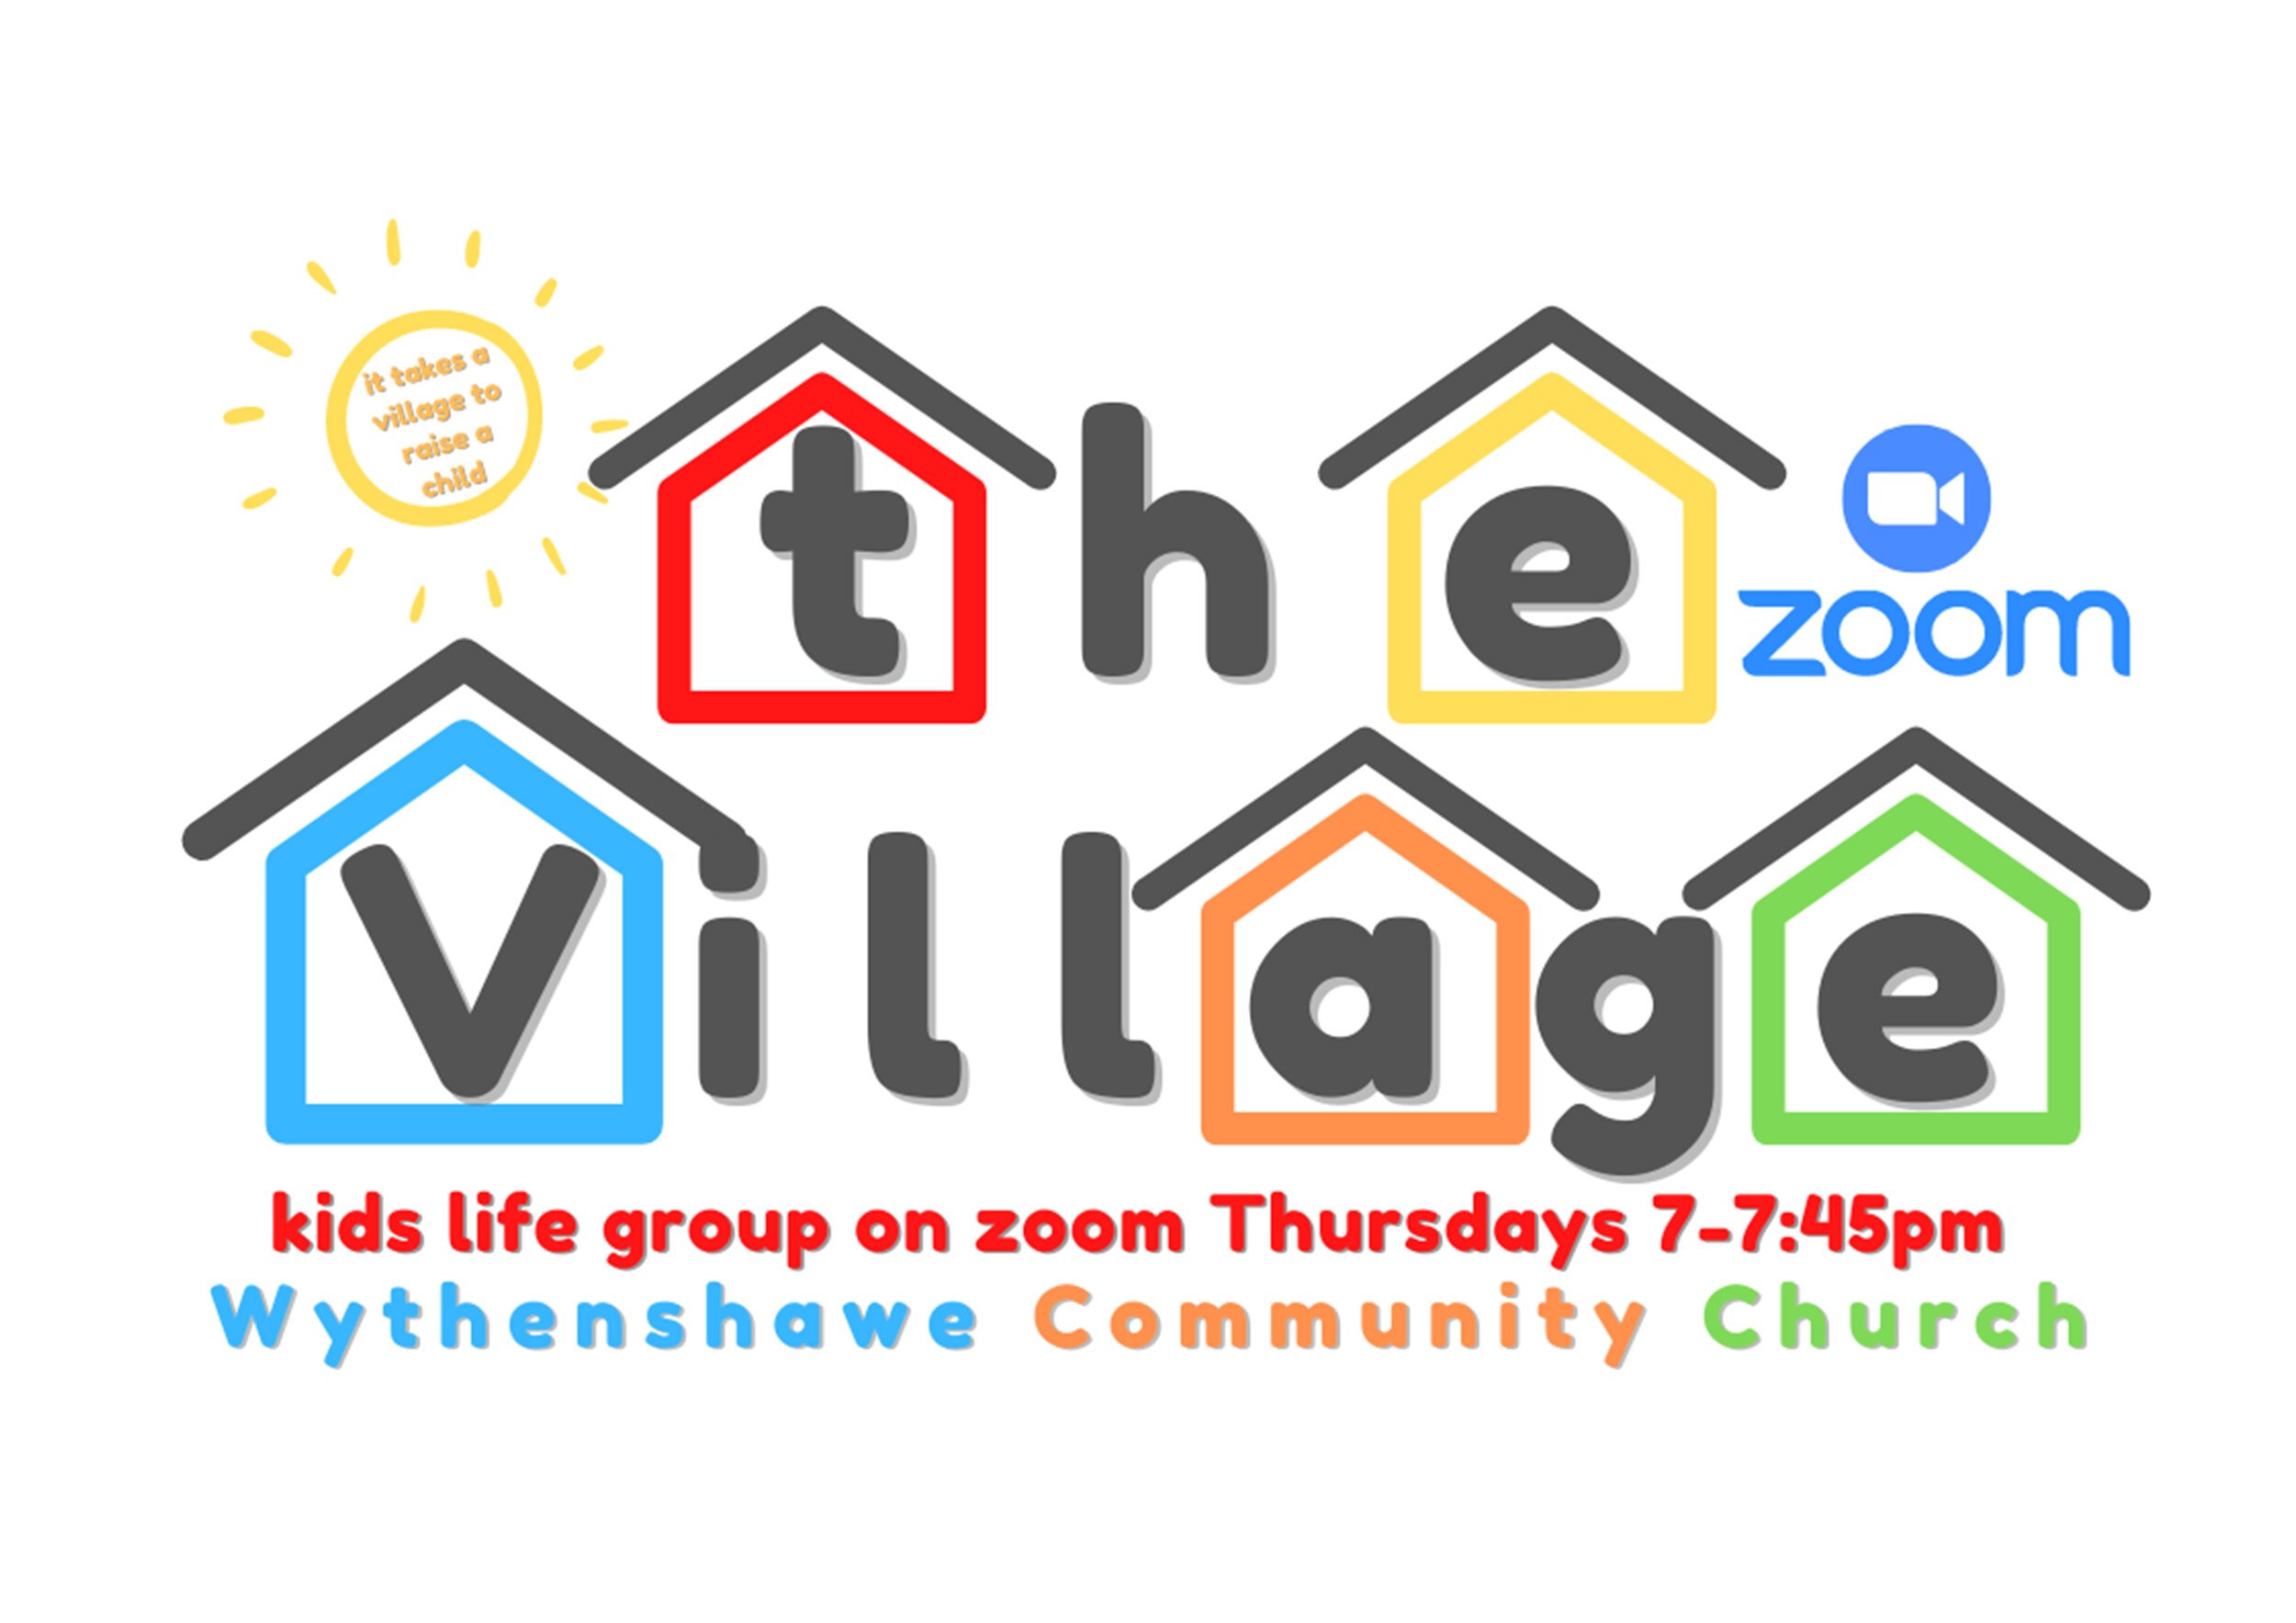 The+Village+Zoom 5.jpeg